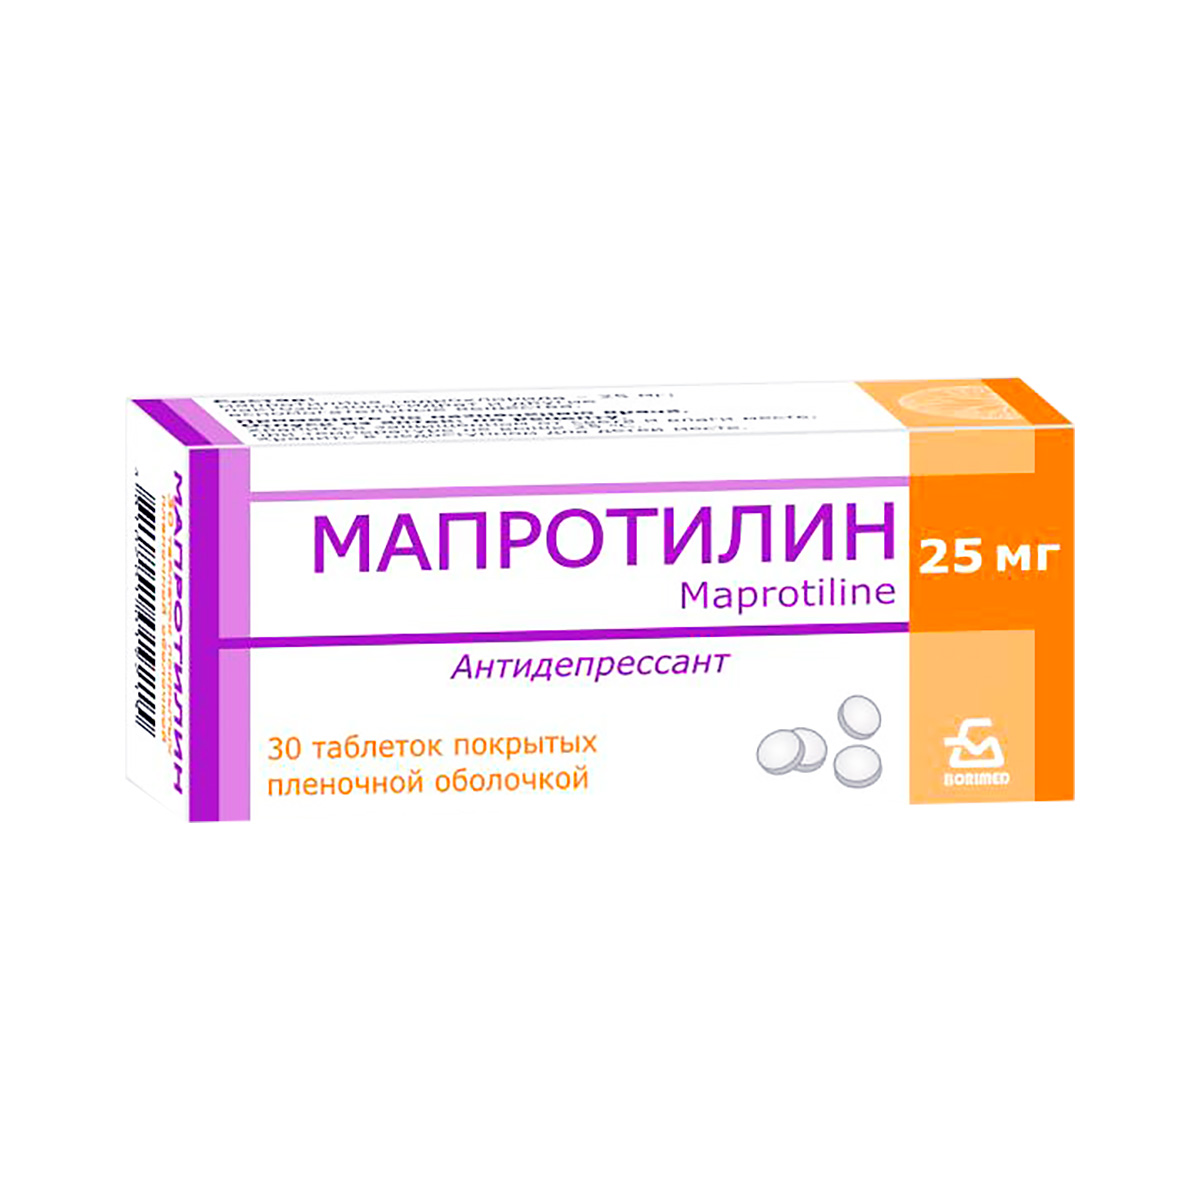 Мапротилин 25 мг таблетки покрытые пленочной оболочкой 30 шт